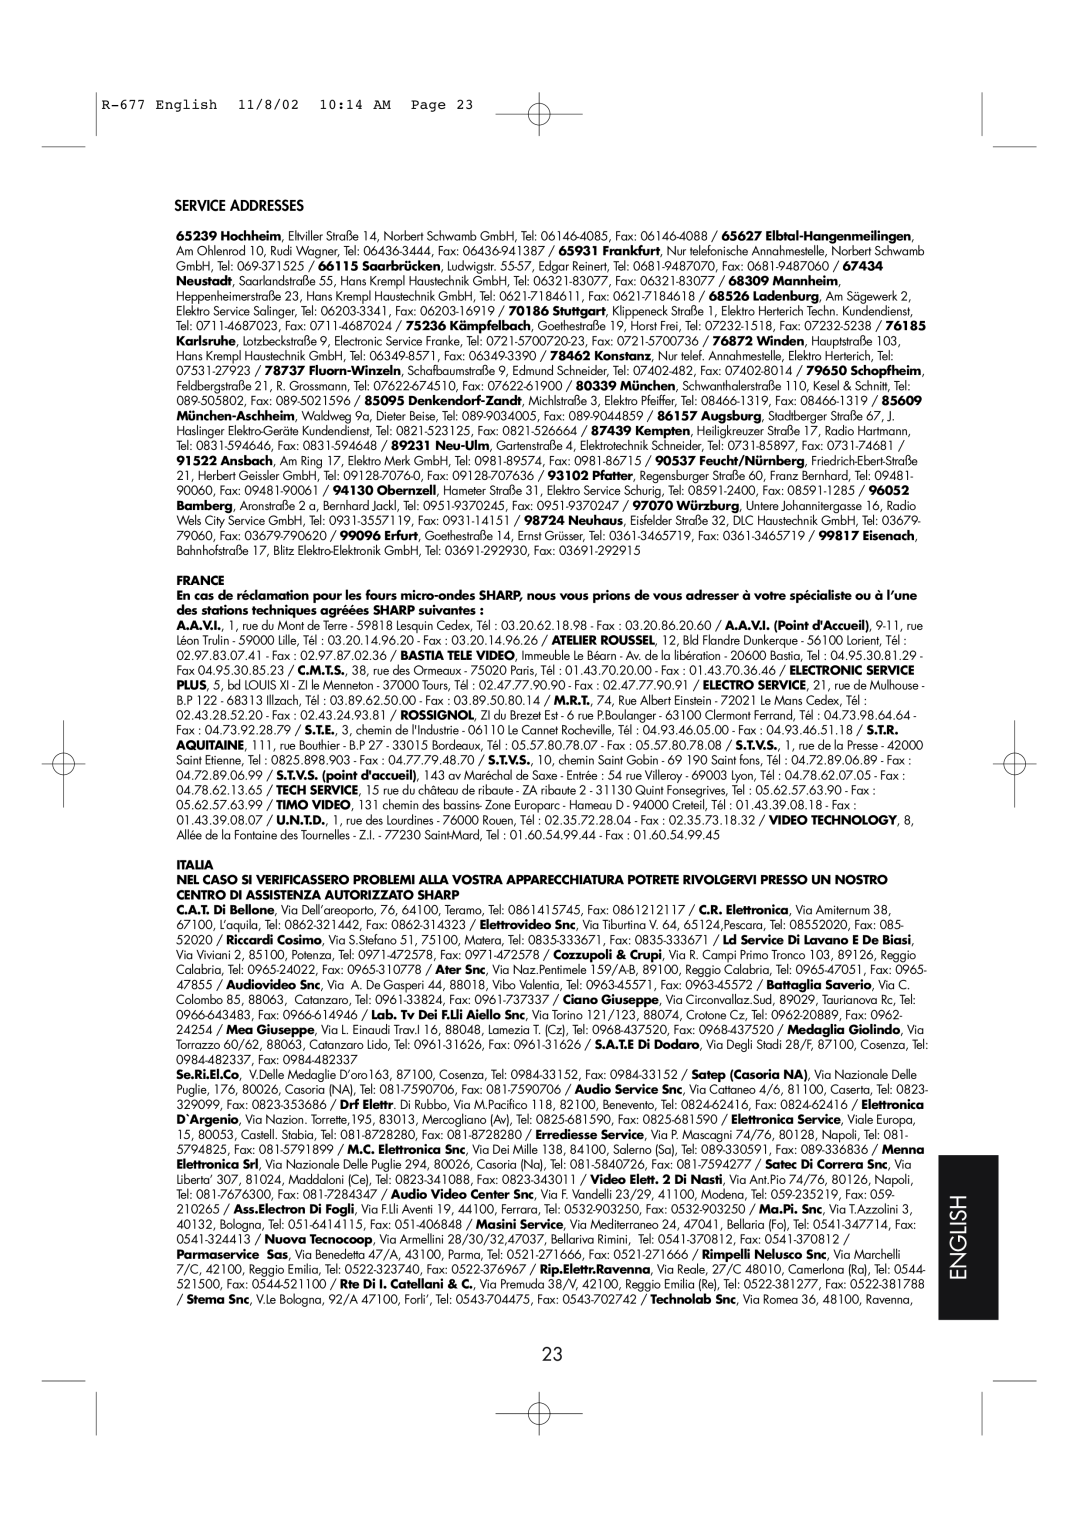 Sharp R-677F operation manual R-677English 11/8/02 10 14 AM Page, France, Italia 